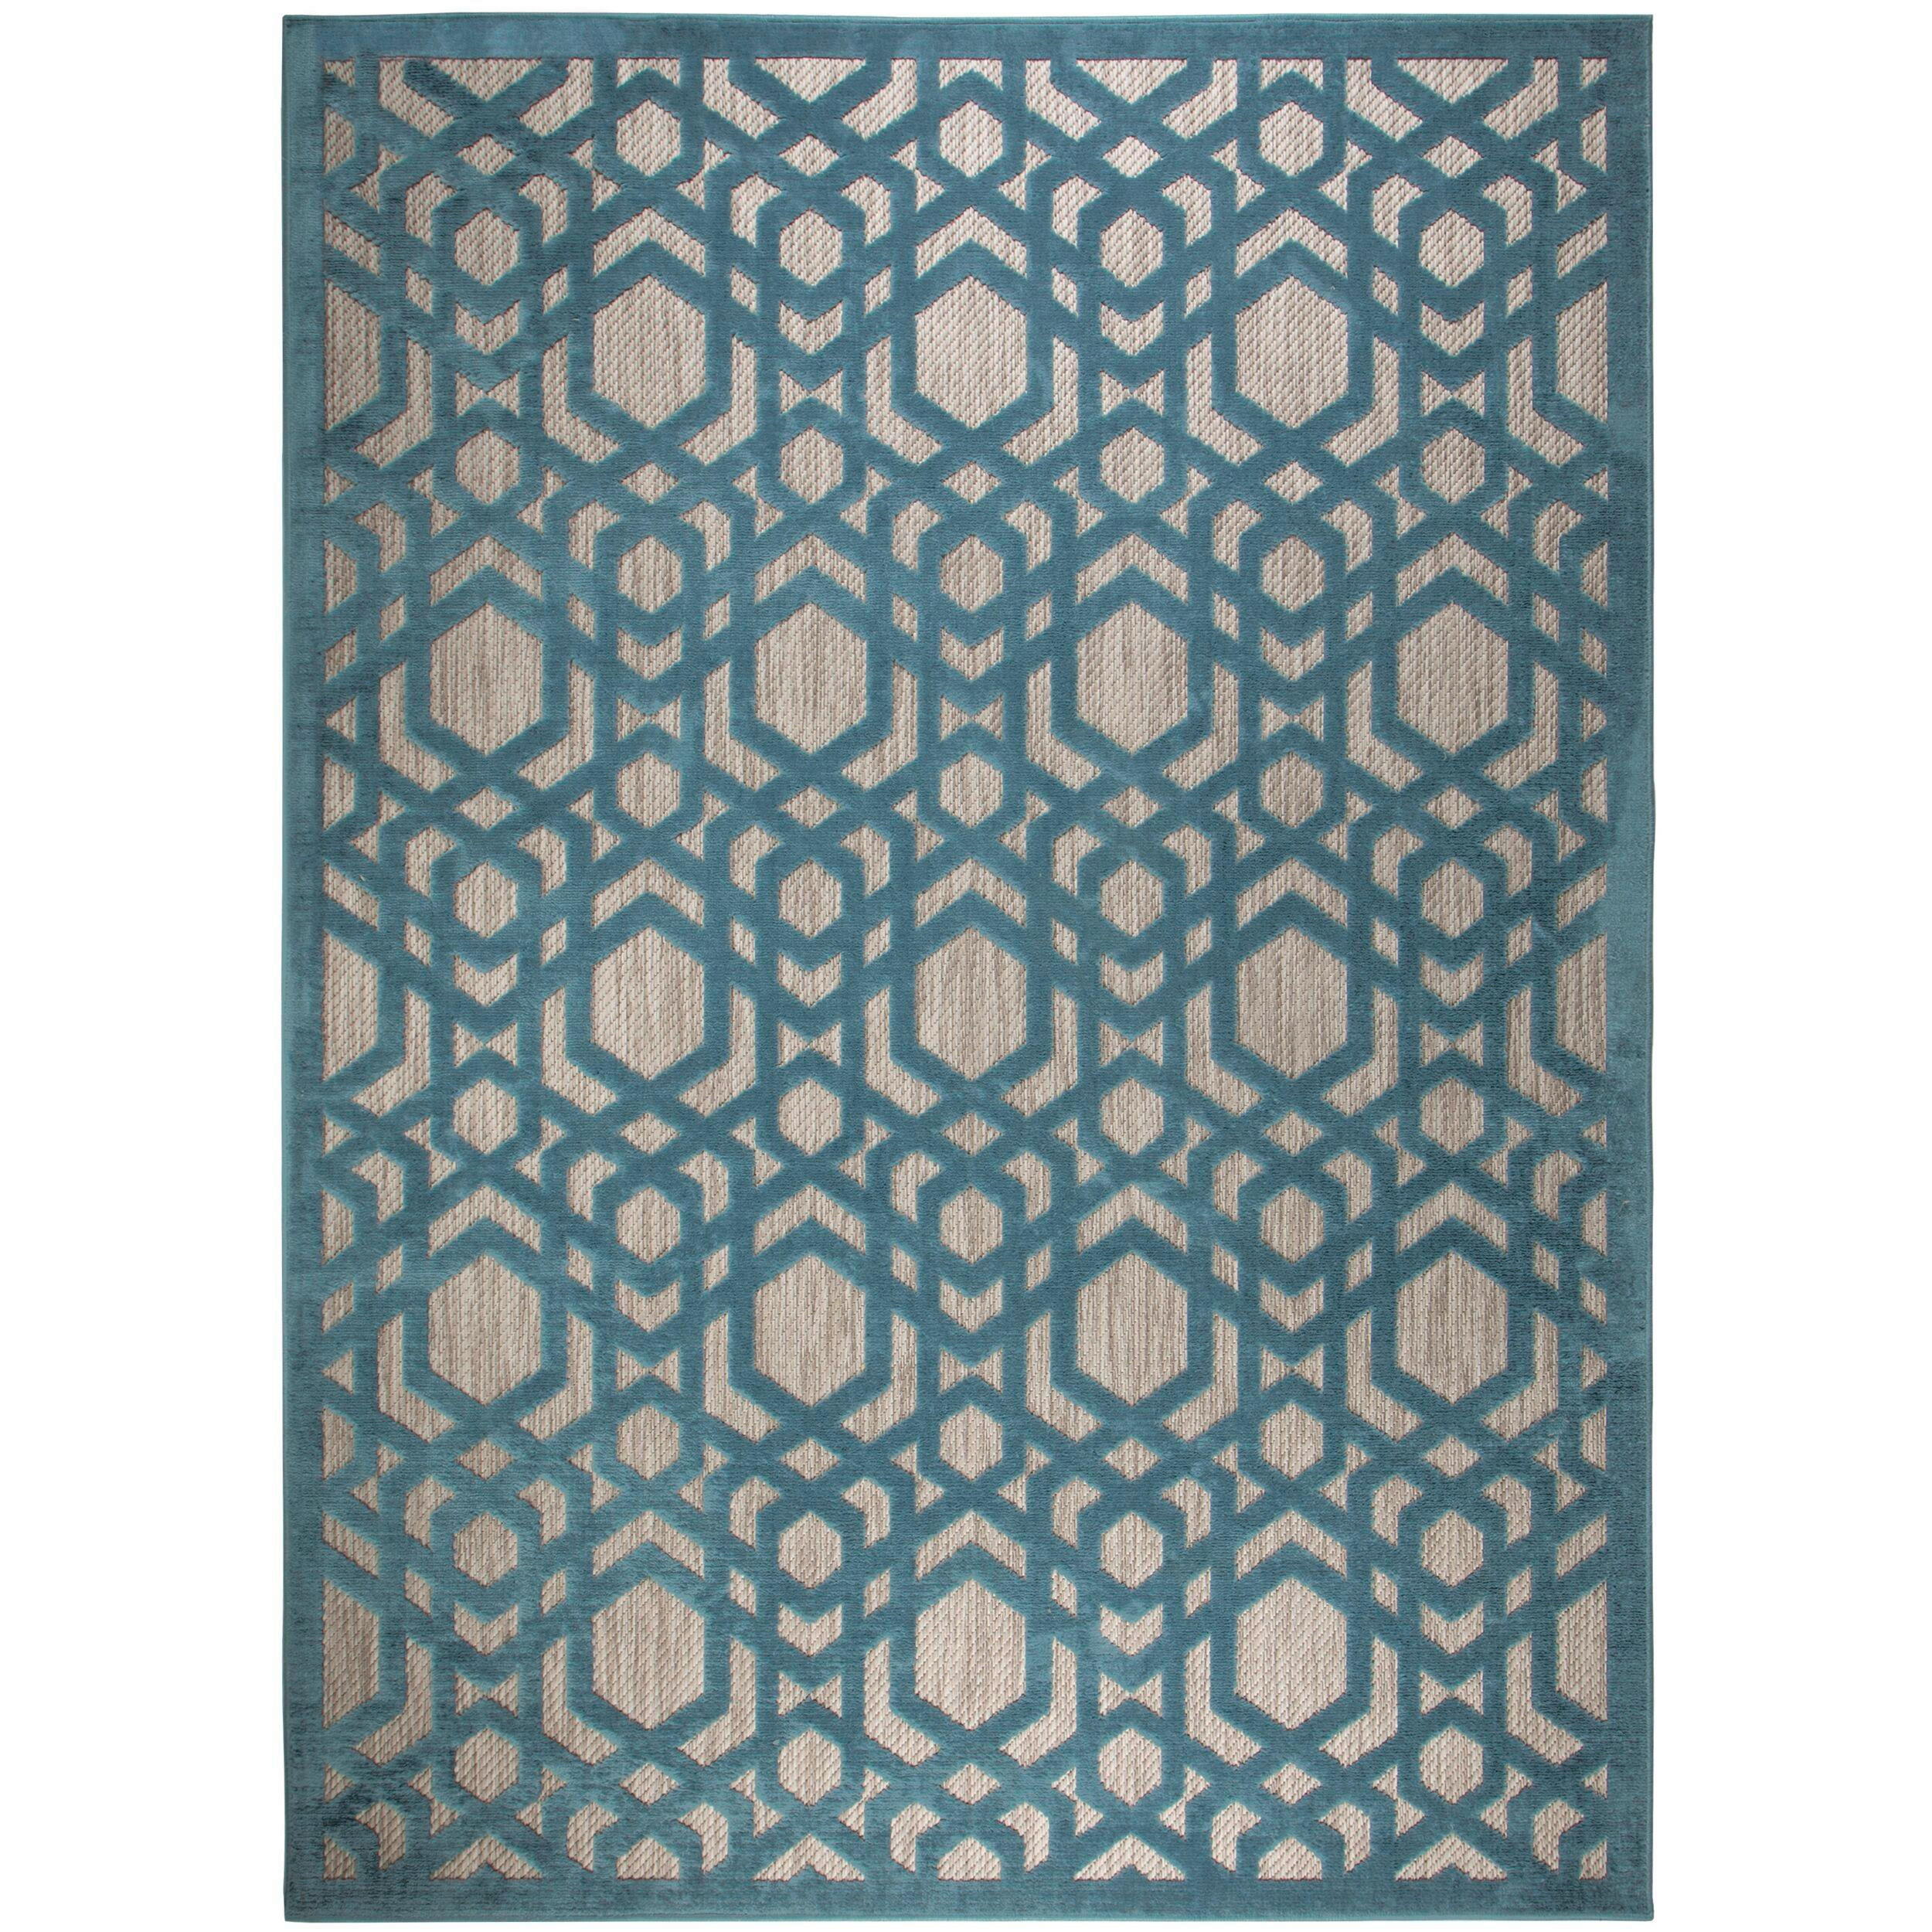 VENKOVNÍ KOBEREC, 120/170 cm, modrá - modrá - textil